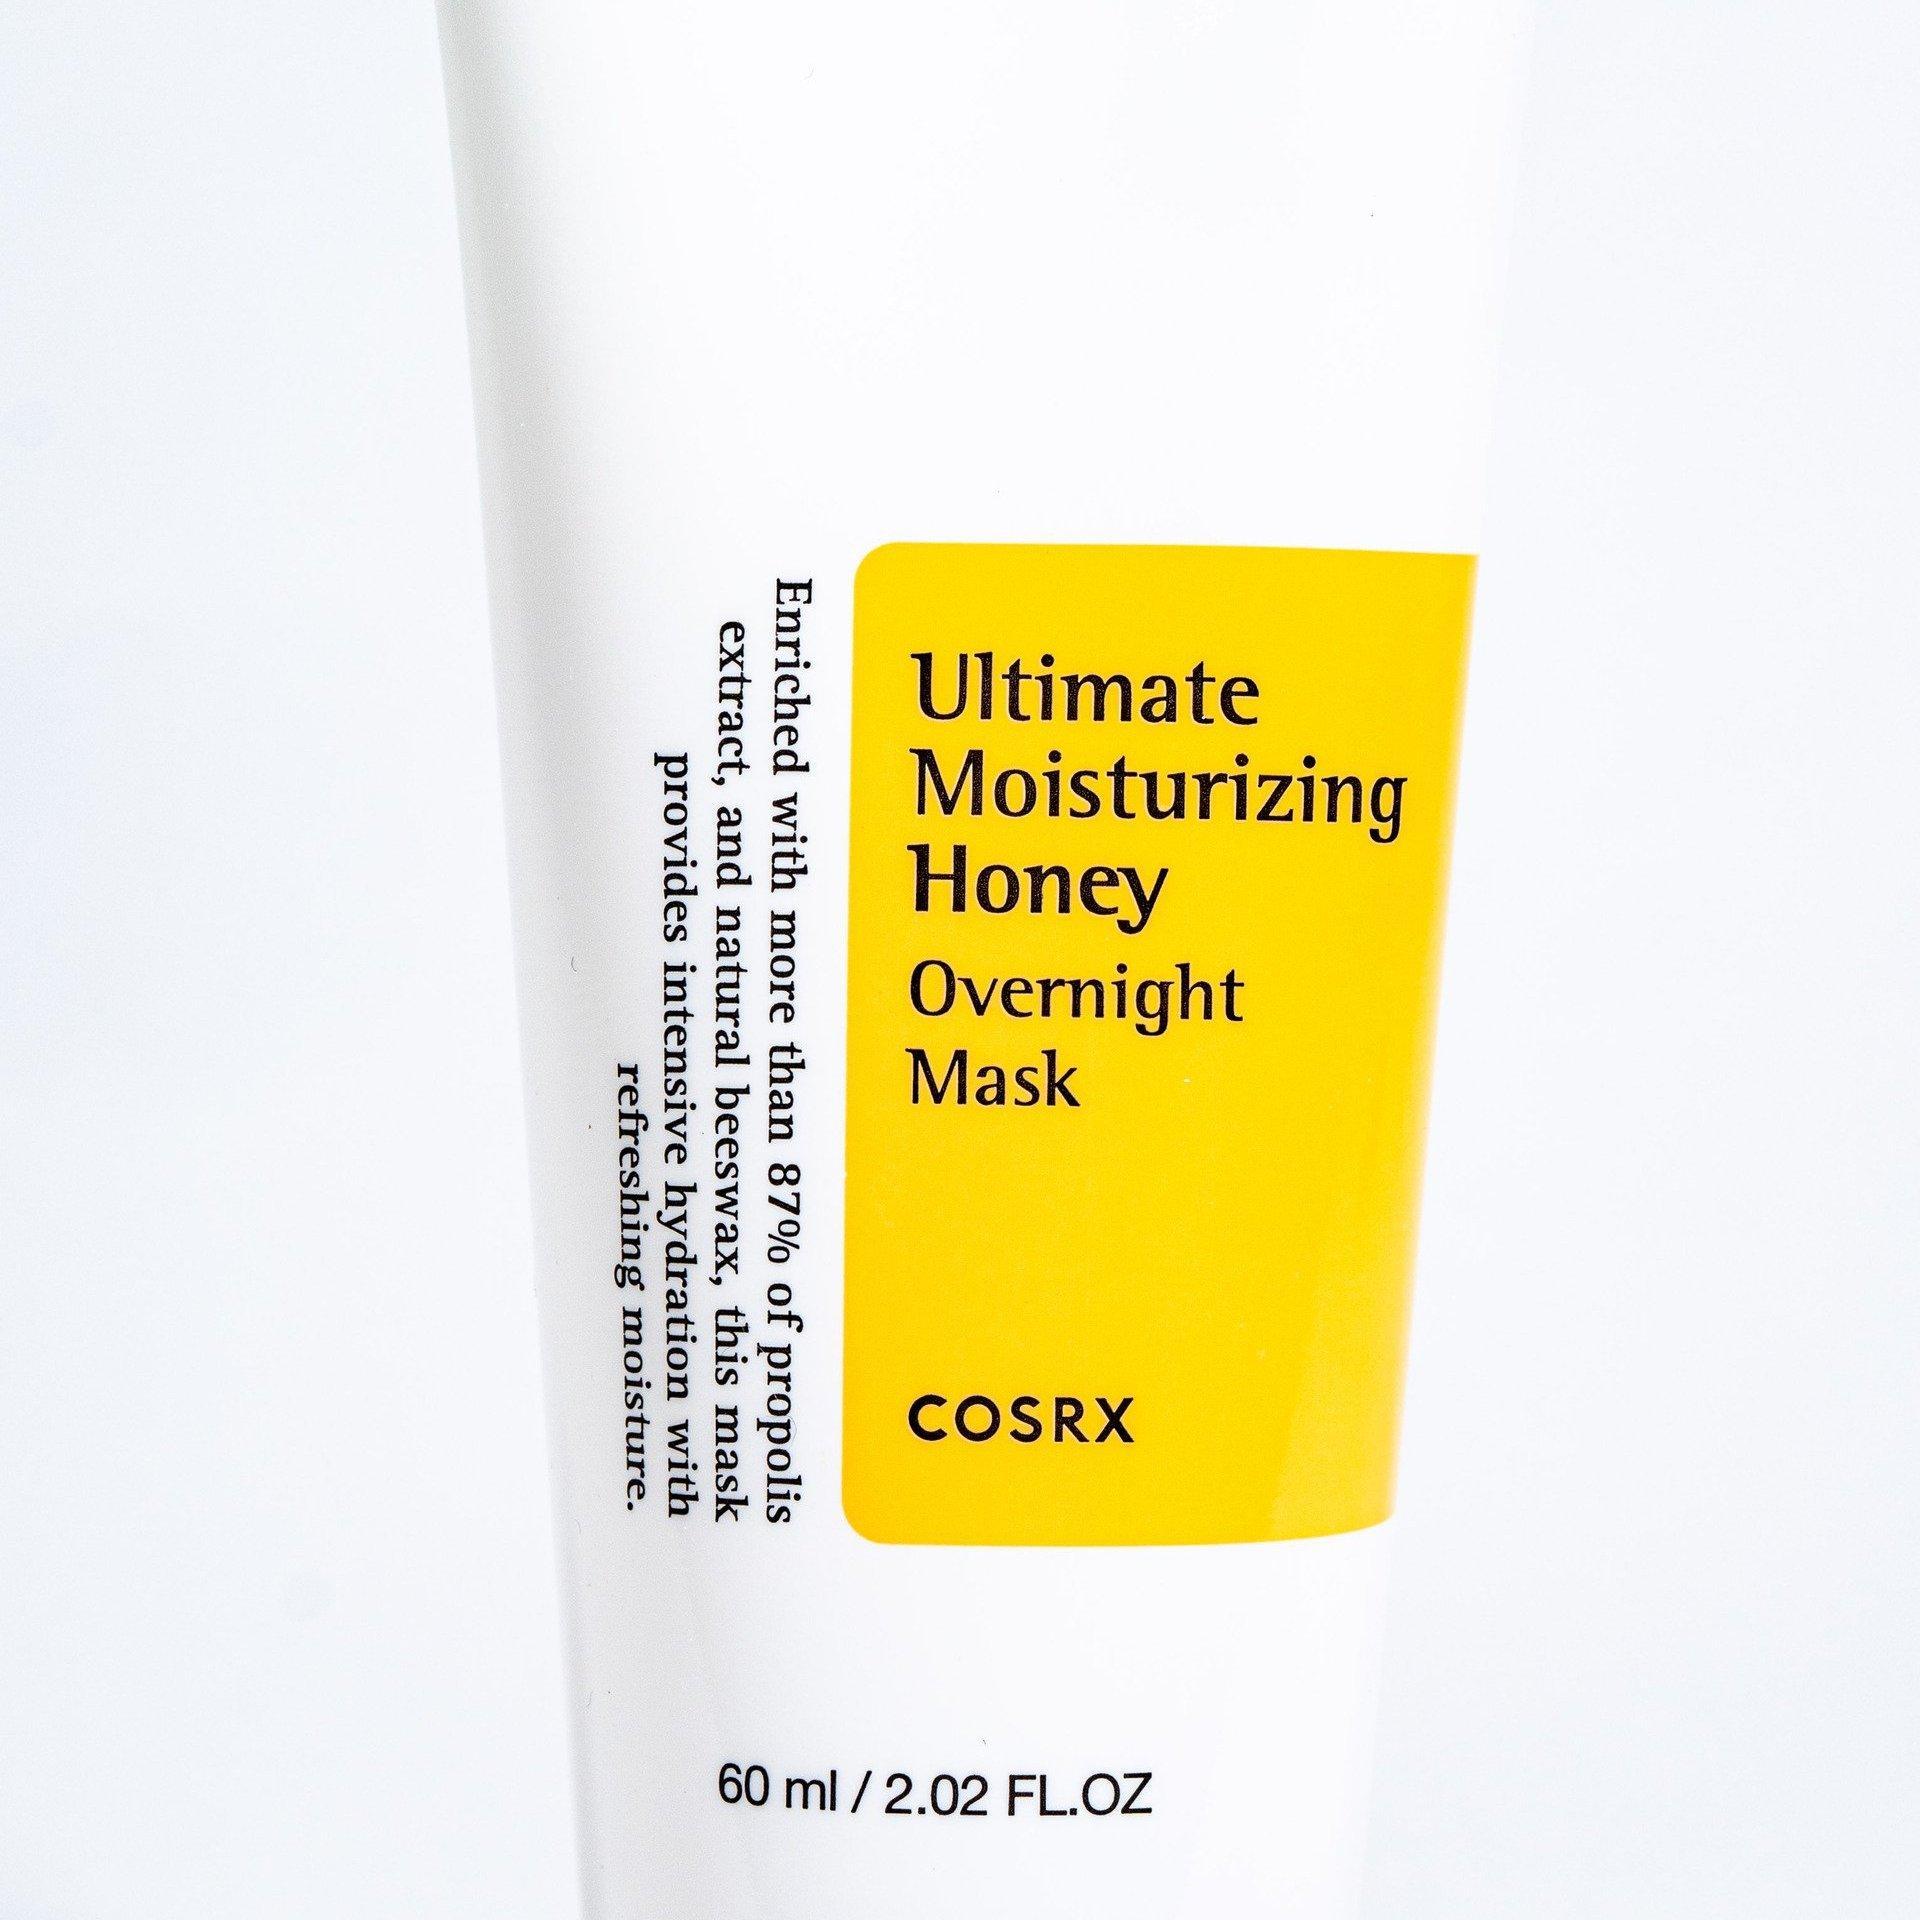 COSRX Ultimate Moisturizing Honey Overnight Mask 60ml